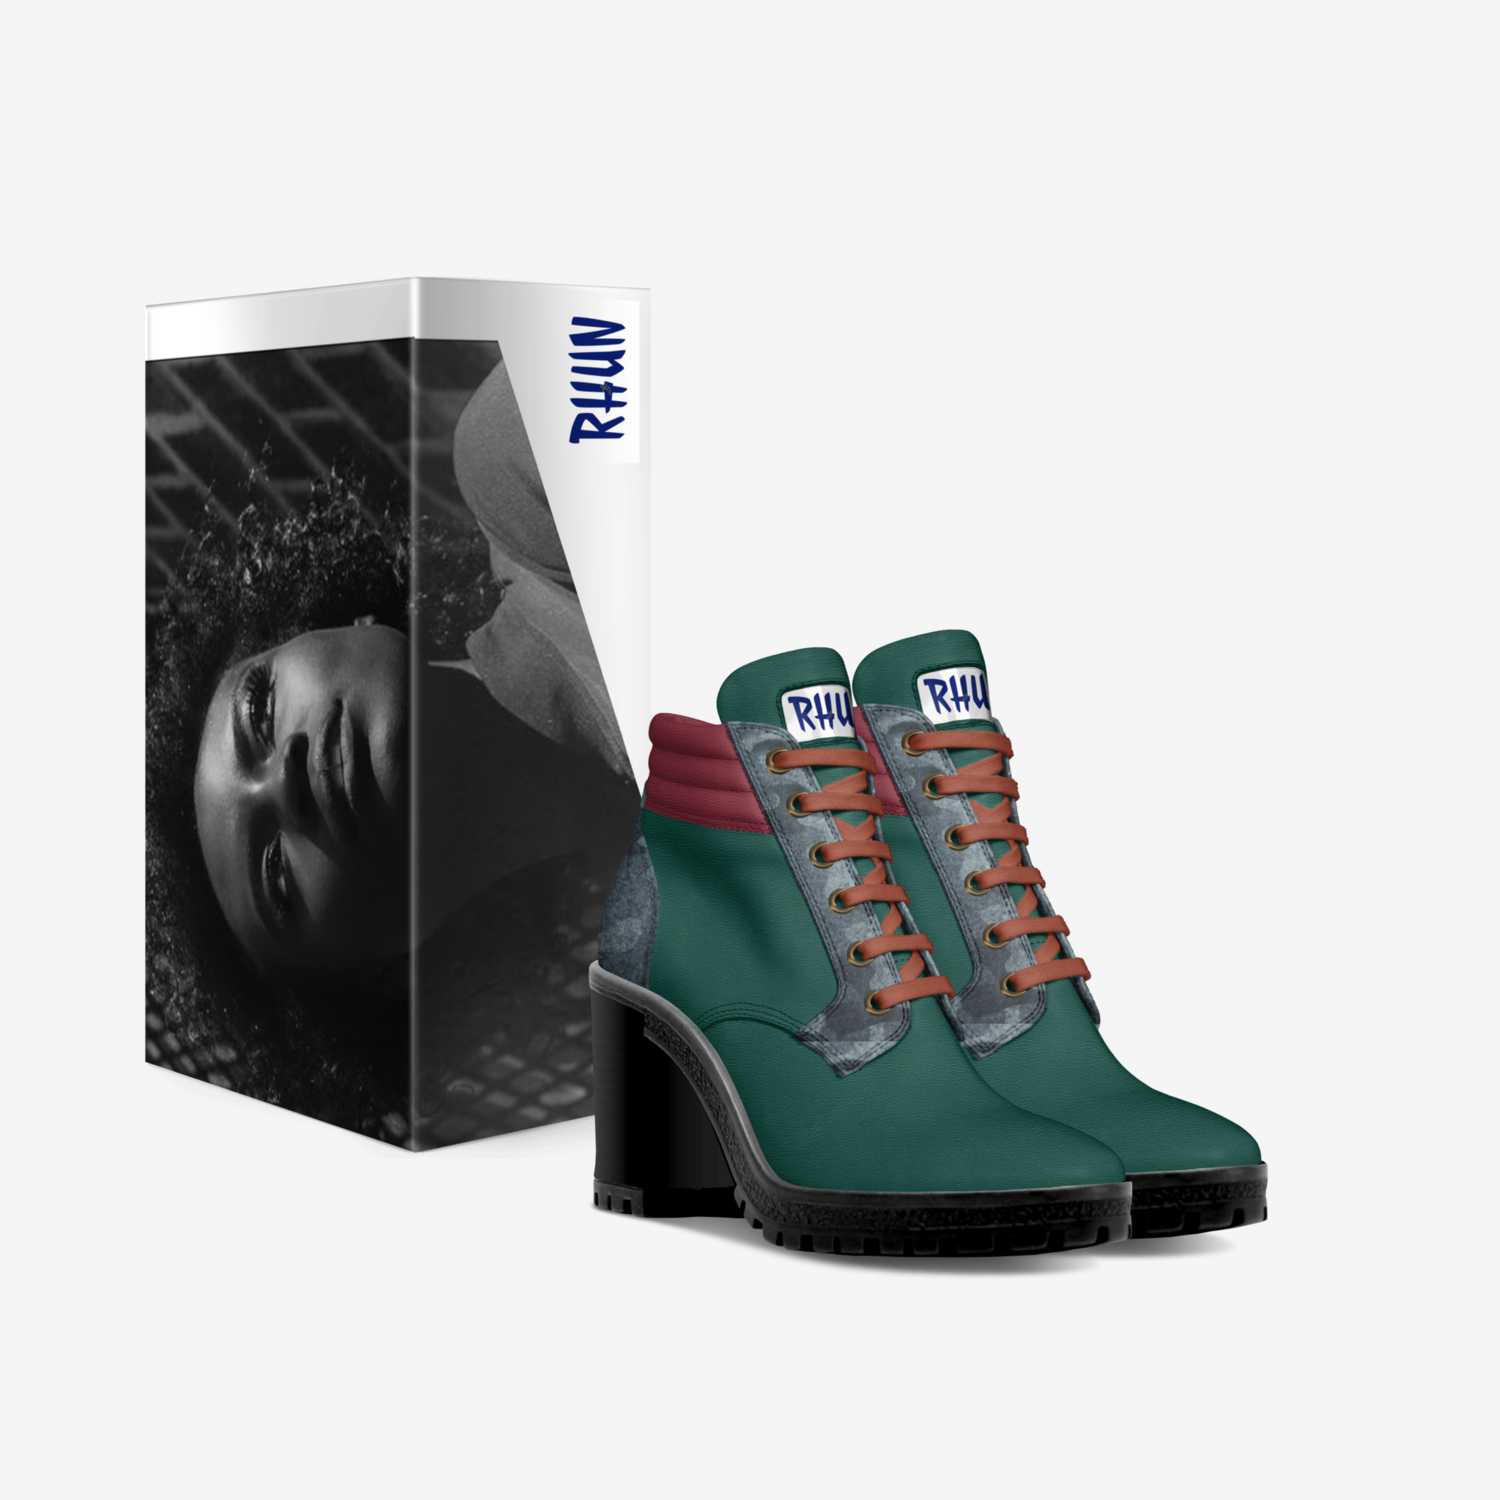 flight custom made in Italy shoes by Yanta Tania | Box view